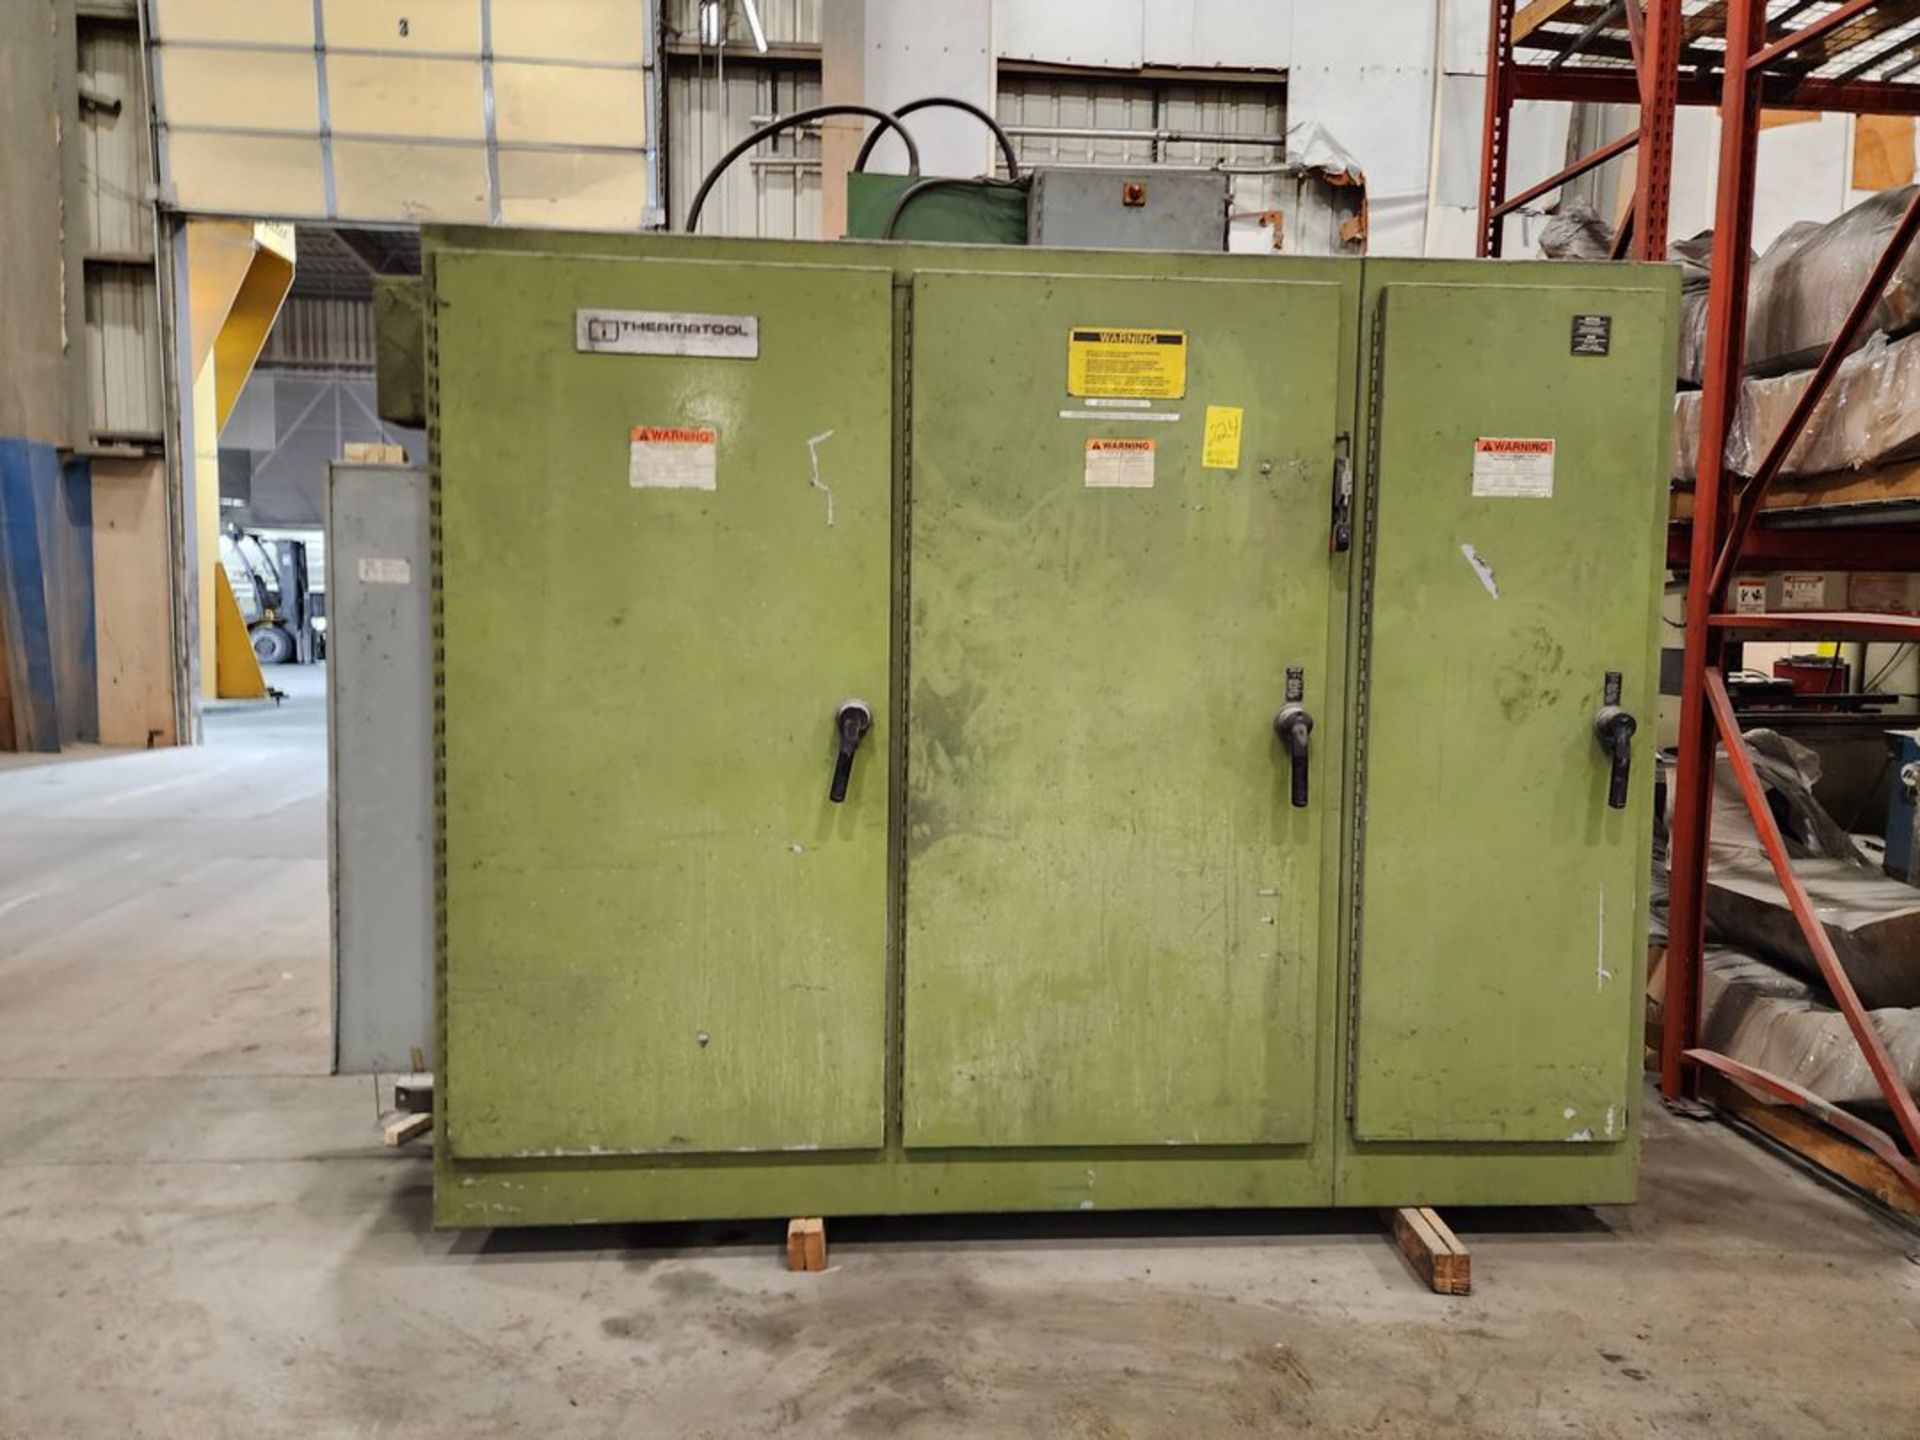 Thermatool Control Panel W/ McLean Ele Enclosure Air Conditioner, 220/230V, 50/60HZ, 1PH